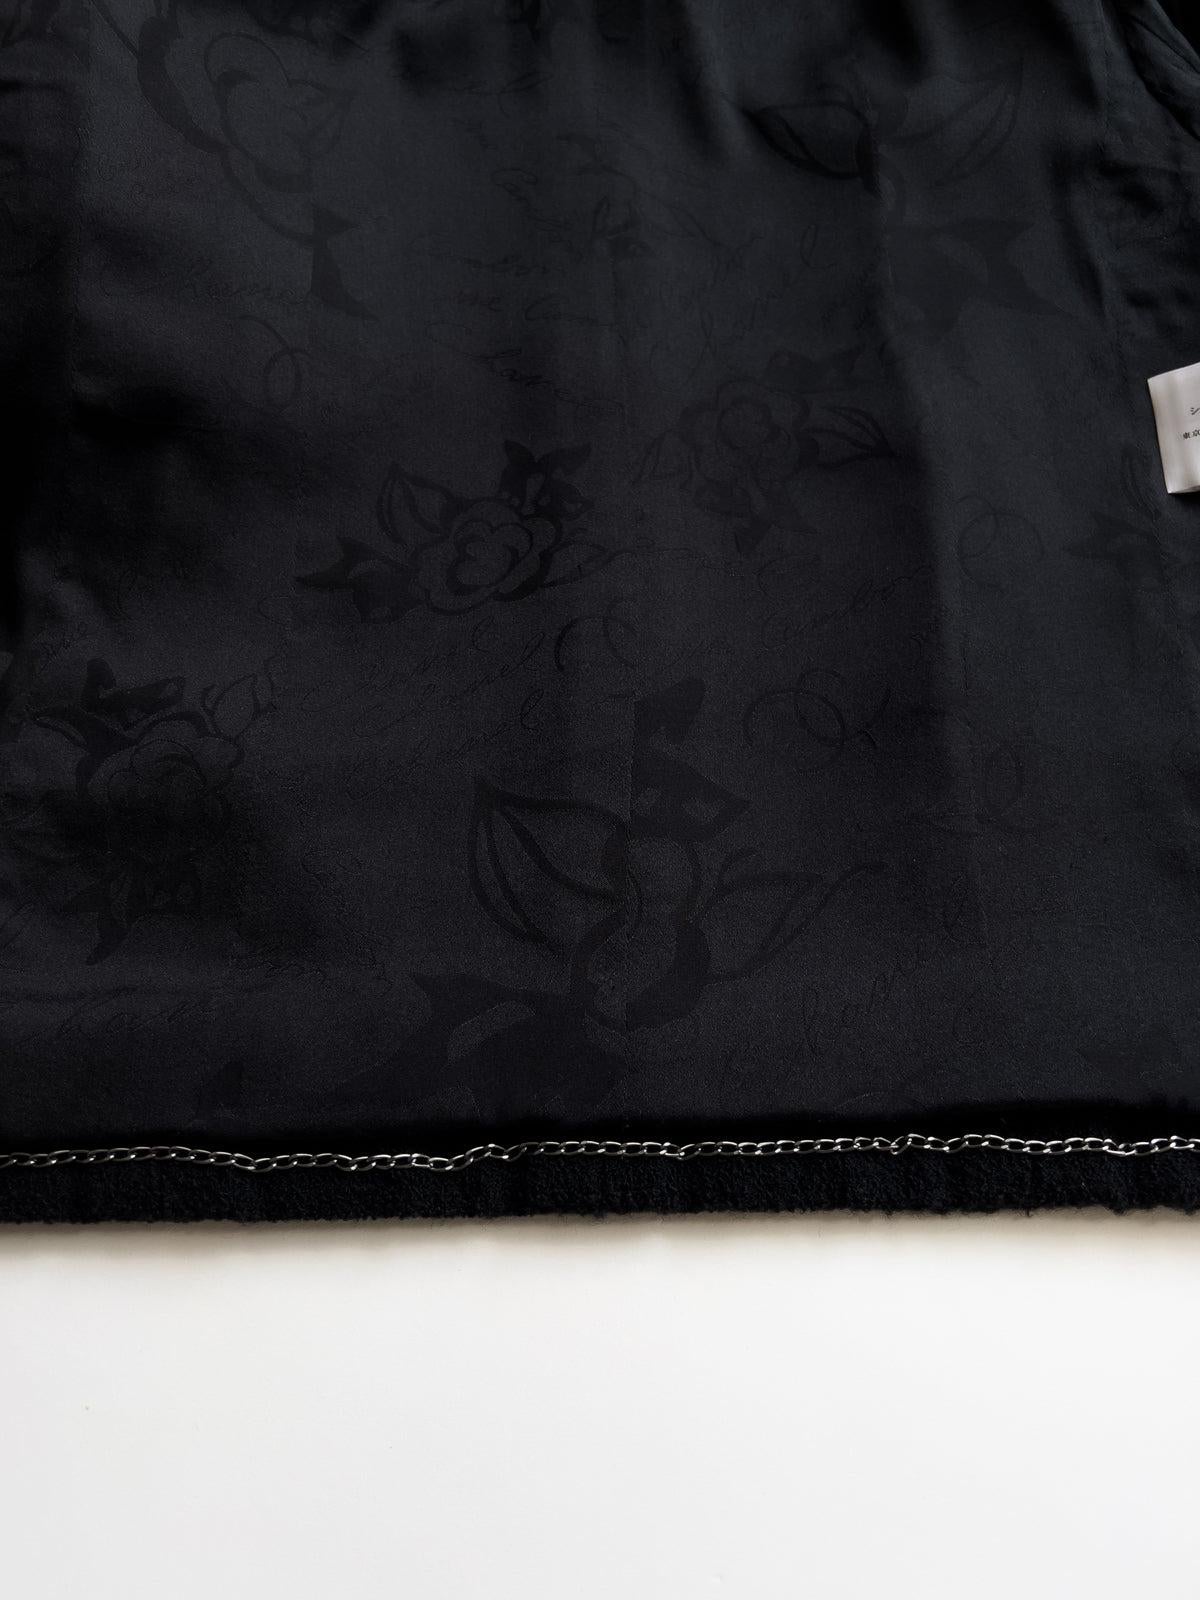 Chanel Most Haunted Black Tweed Jacket 7